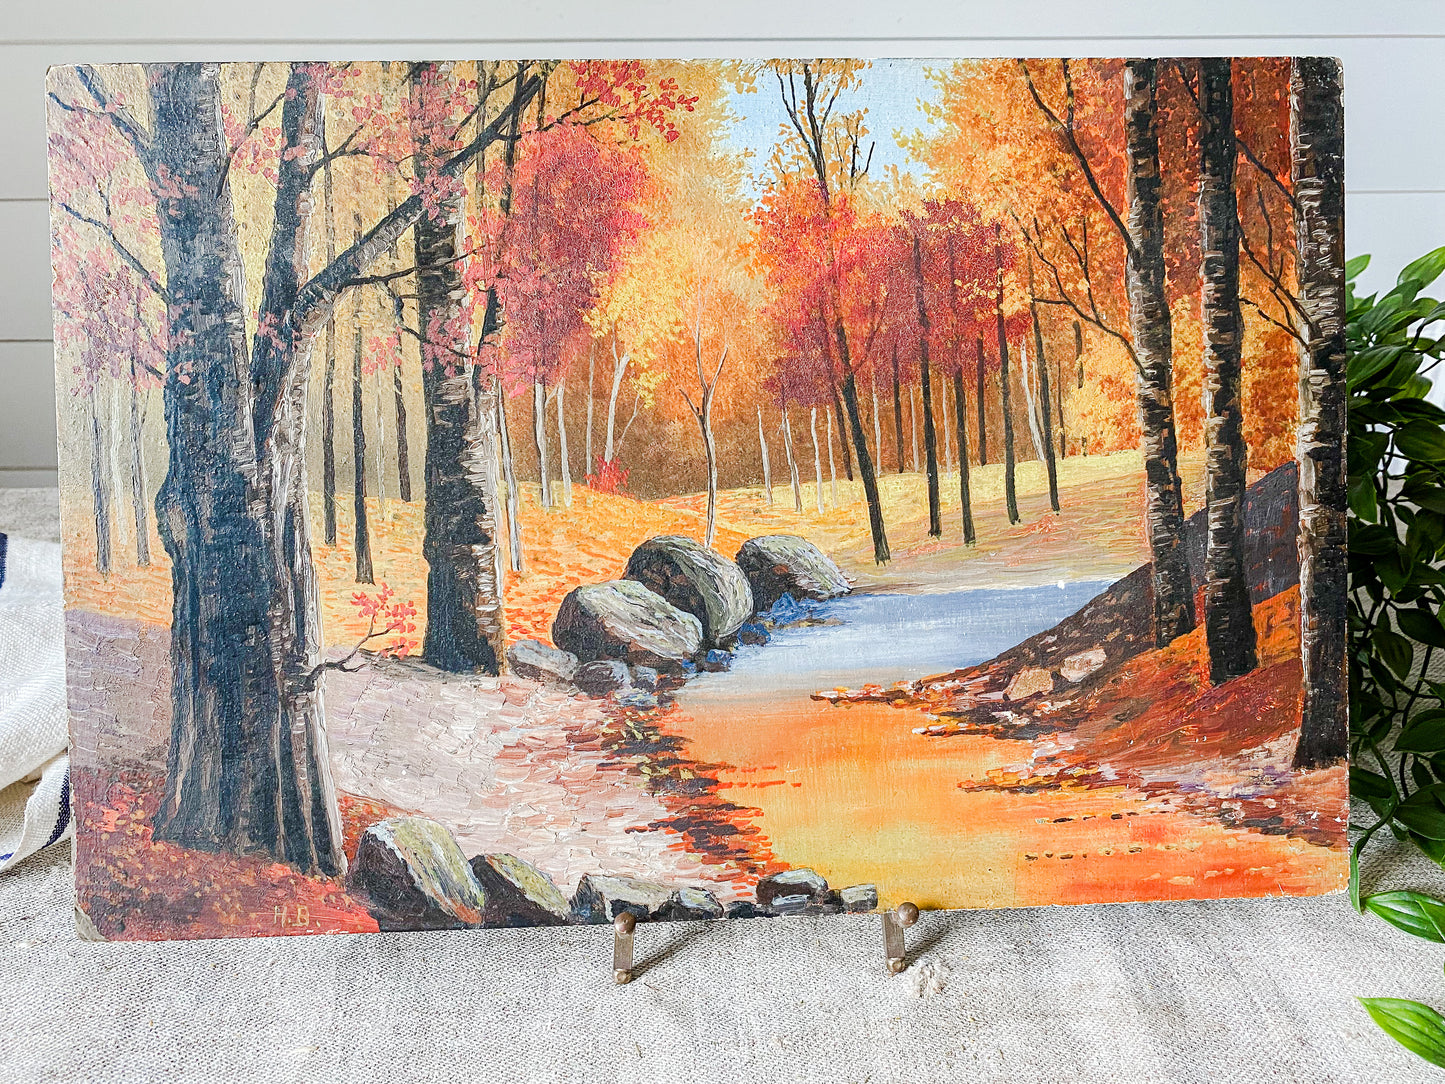 Antique Original Landscape Oil Painting on Board | The Glories of Fall | Plattin Creek Valley, Missouri